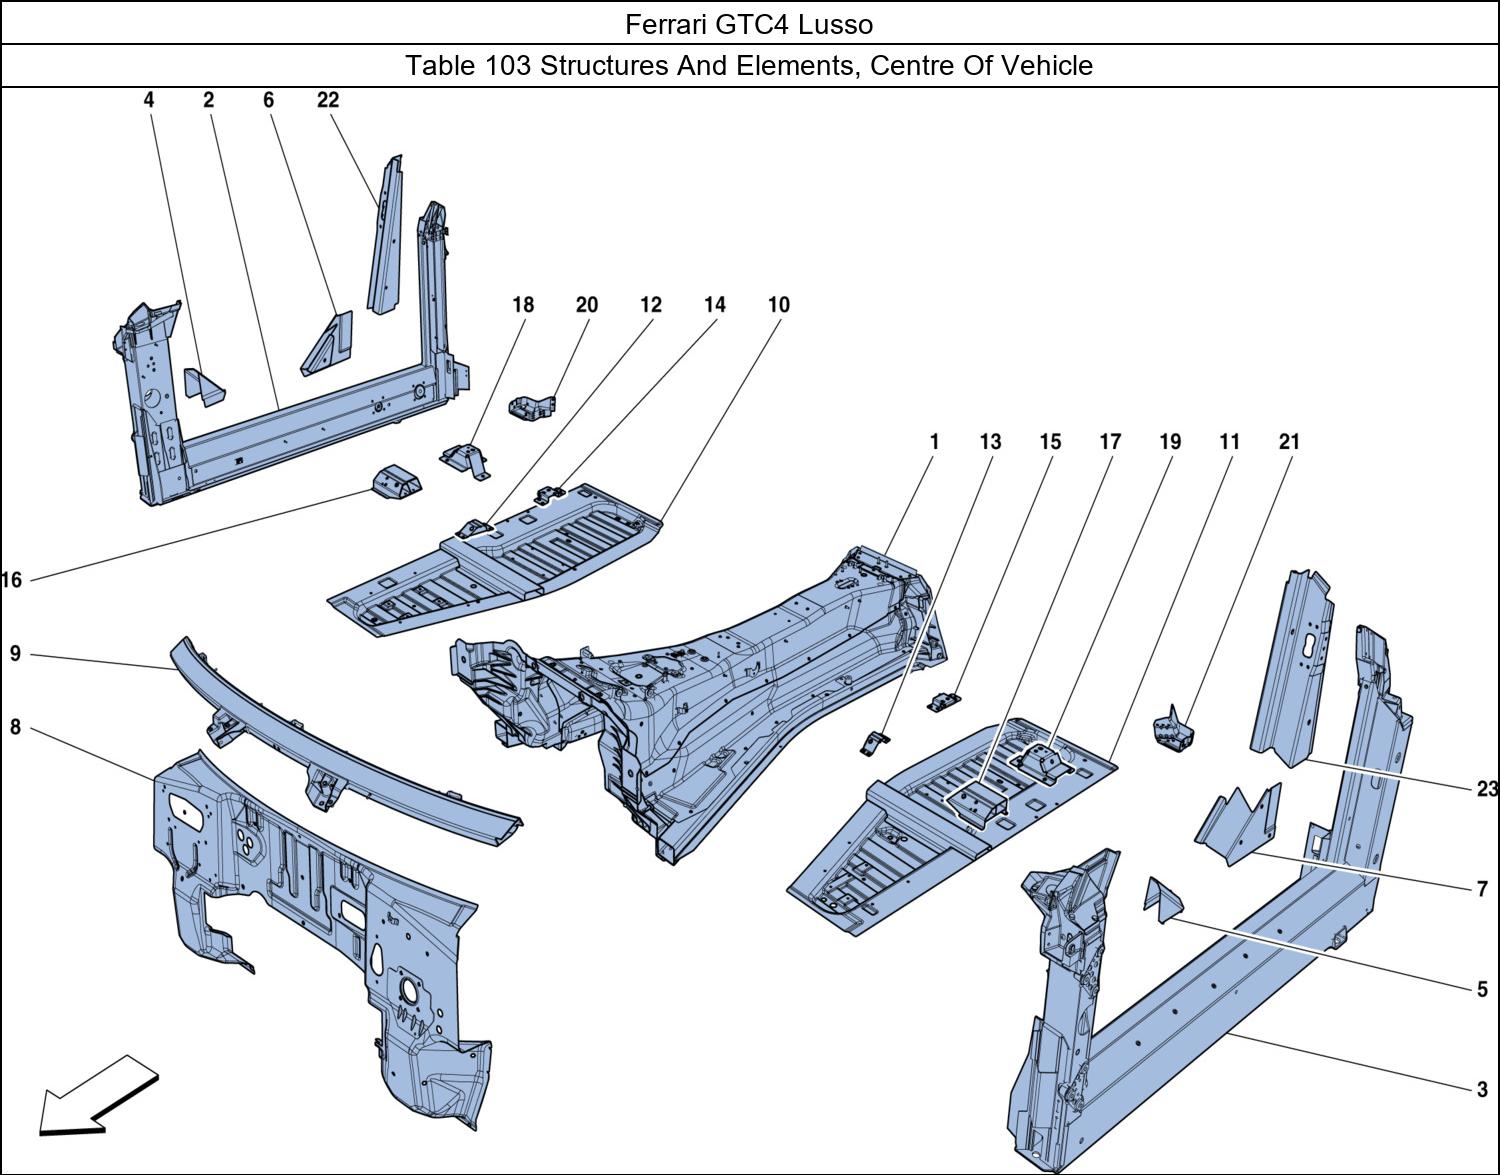 Ferrari Parts Ferrari GTC4 Lusso Table 103 Structures And Elements, Centre Of Vehicle